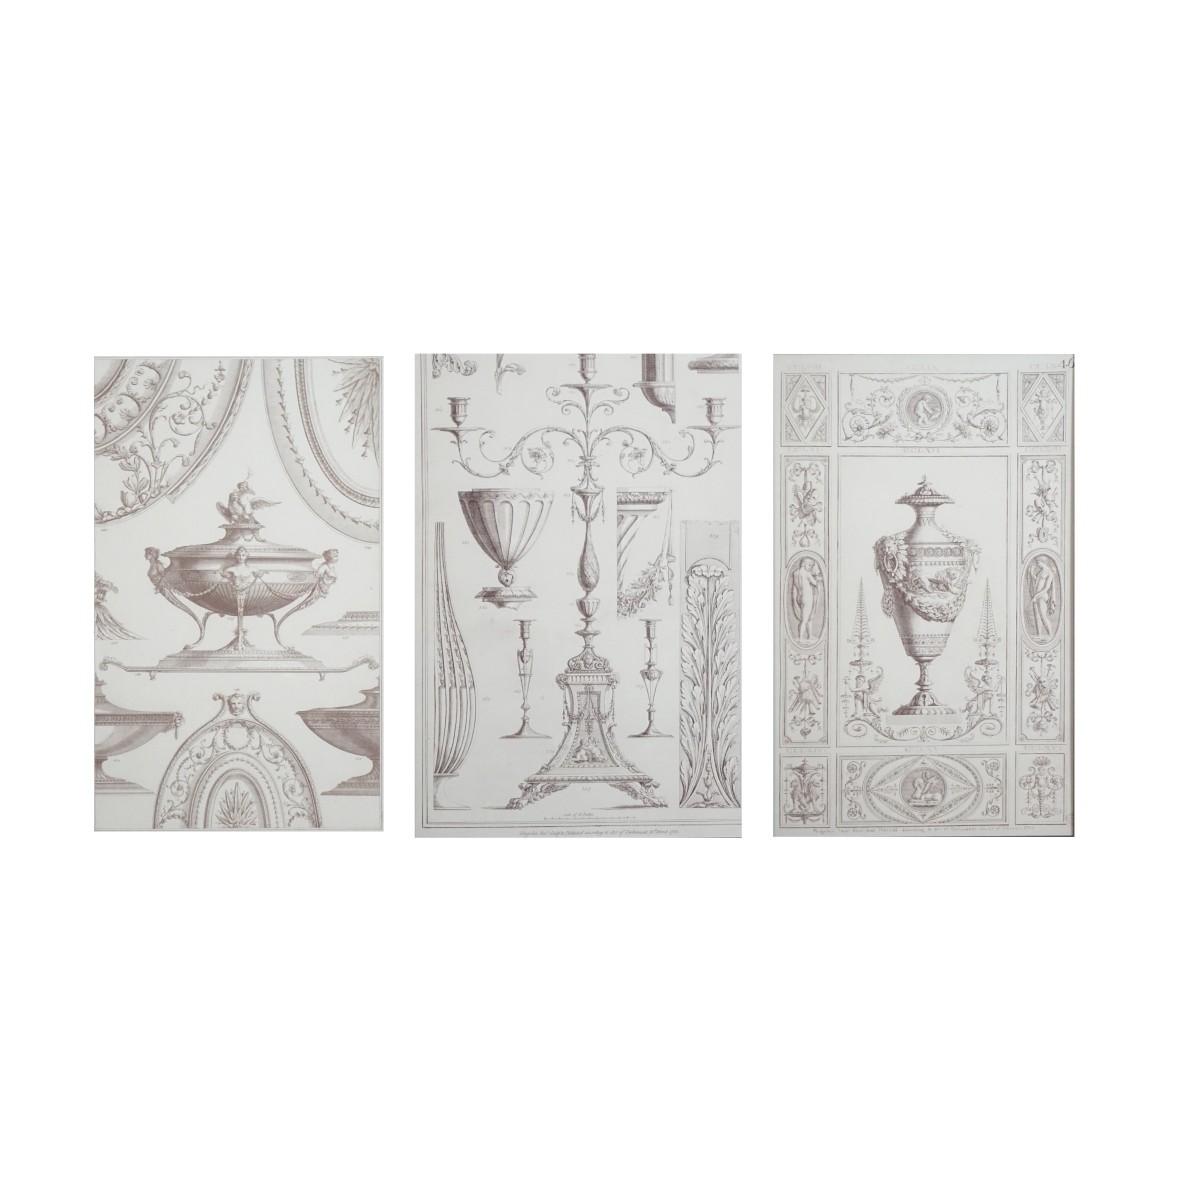 Three (3) Prints After Michelangelo Pergolesi